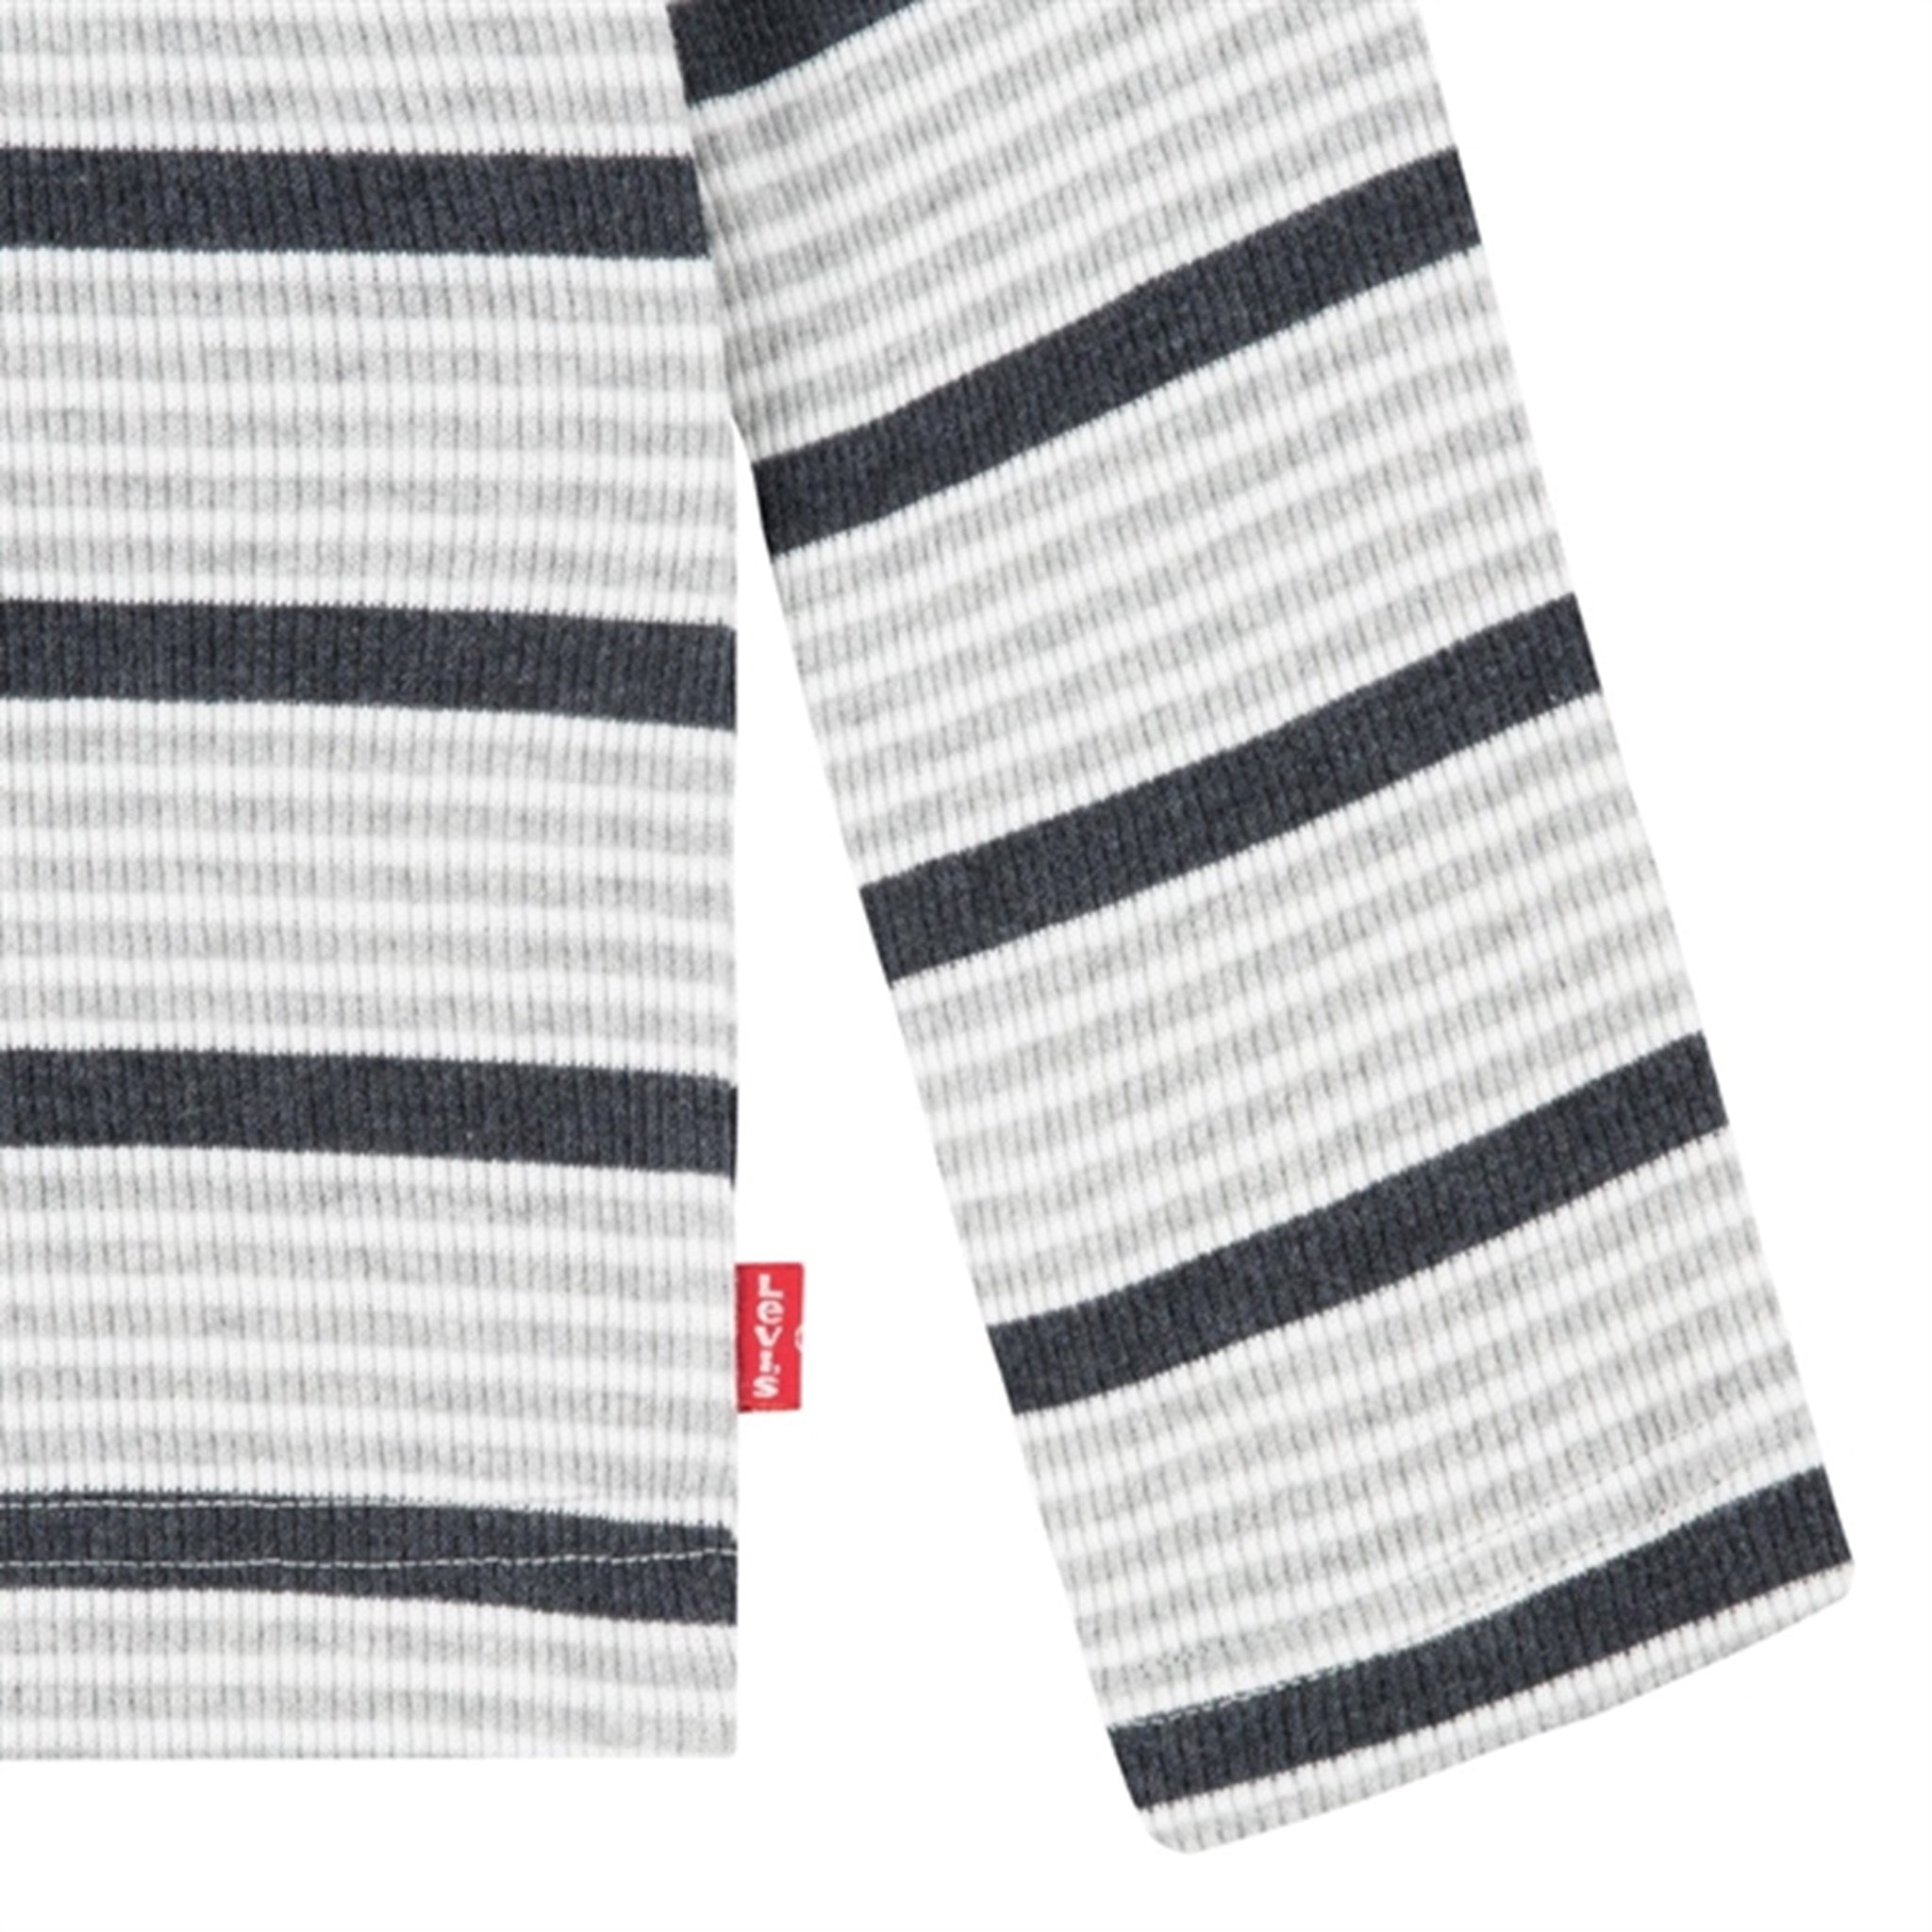 Levi's Long Sleeve Striped Thermal T-Shirt Light Grayheather 2